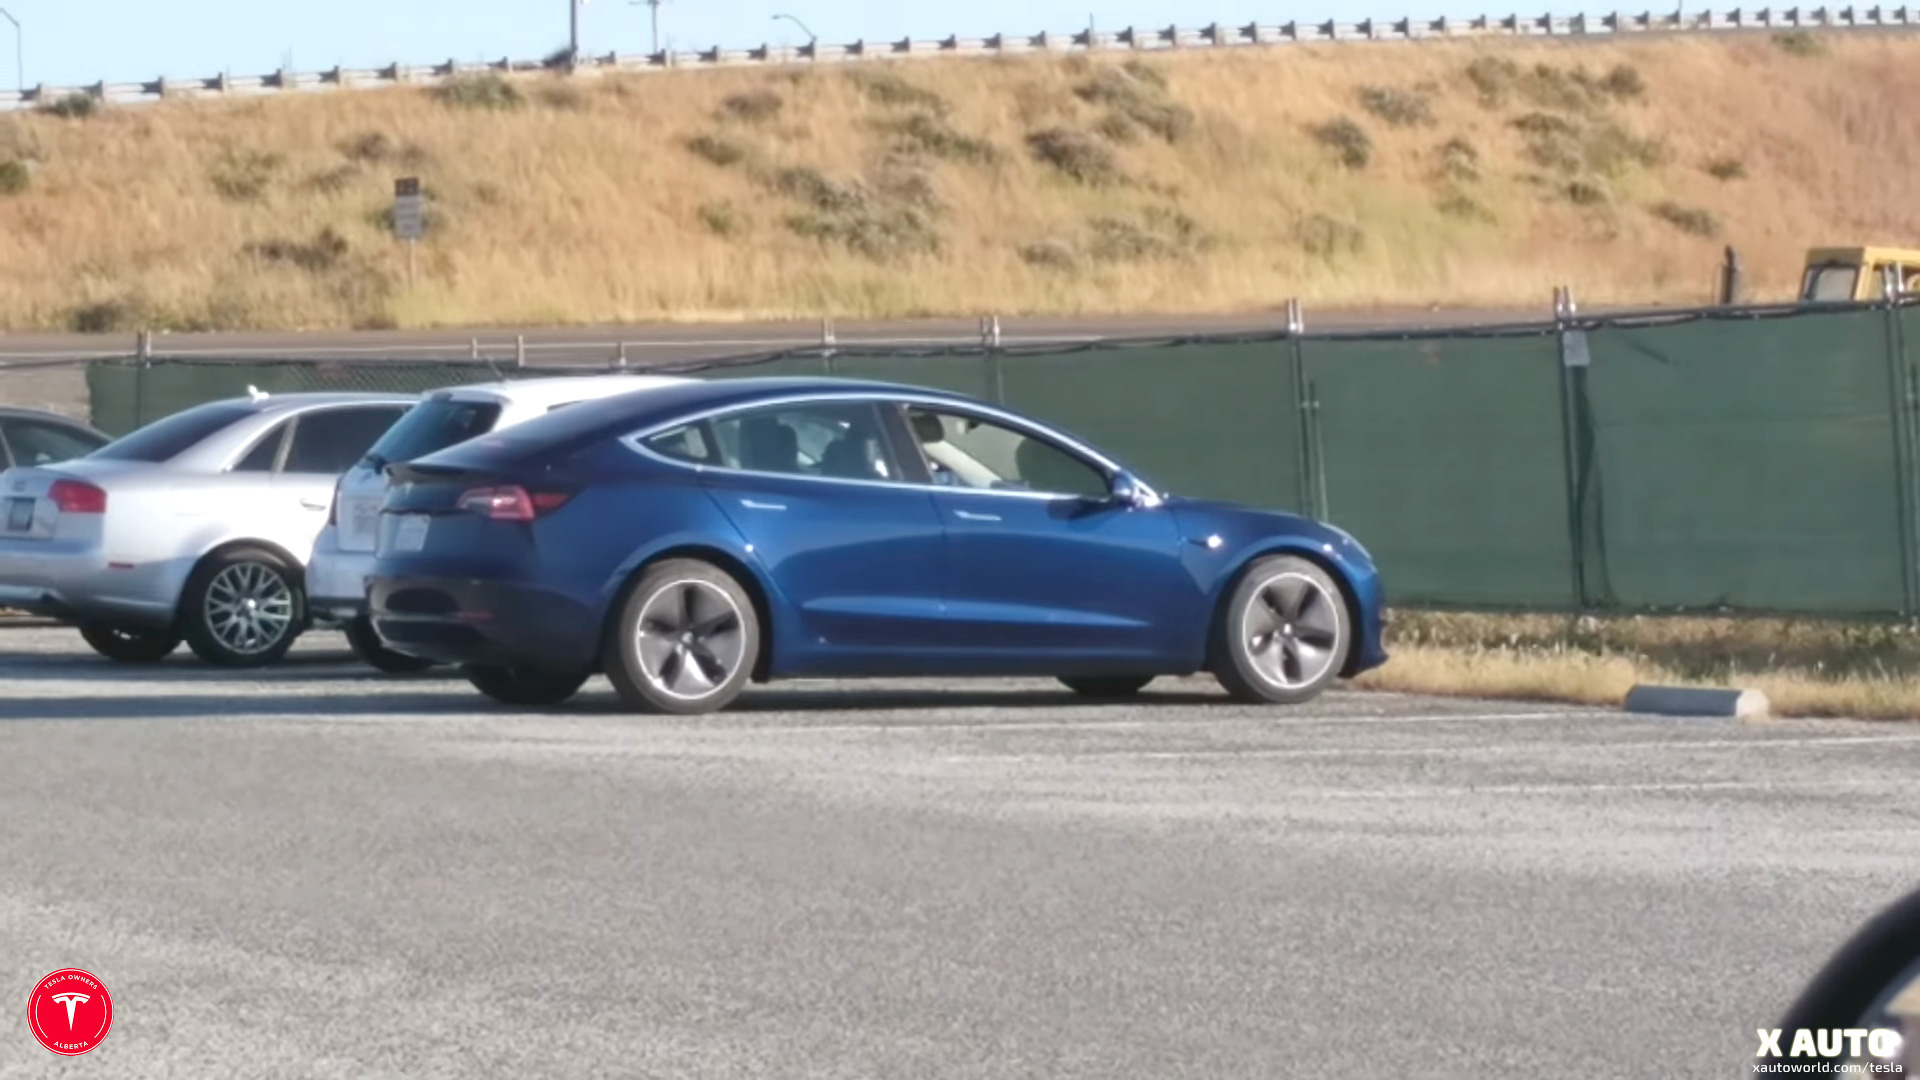 New 'aero wheels' spotted on a Tesla Model 3